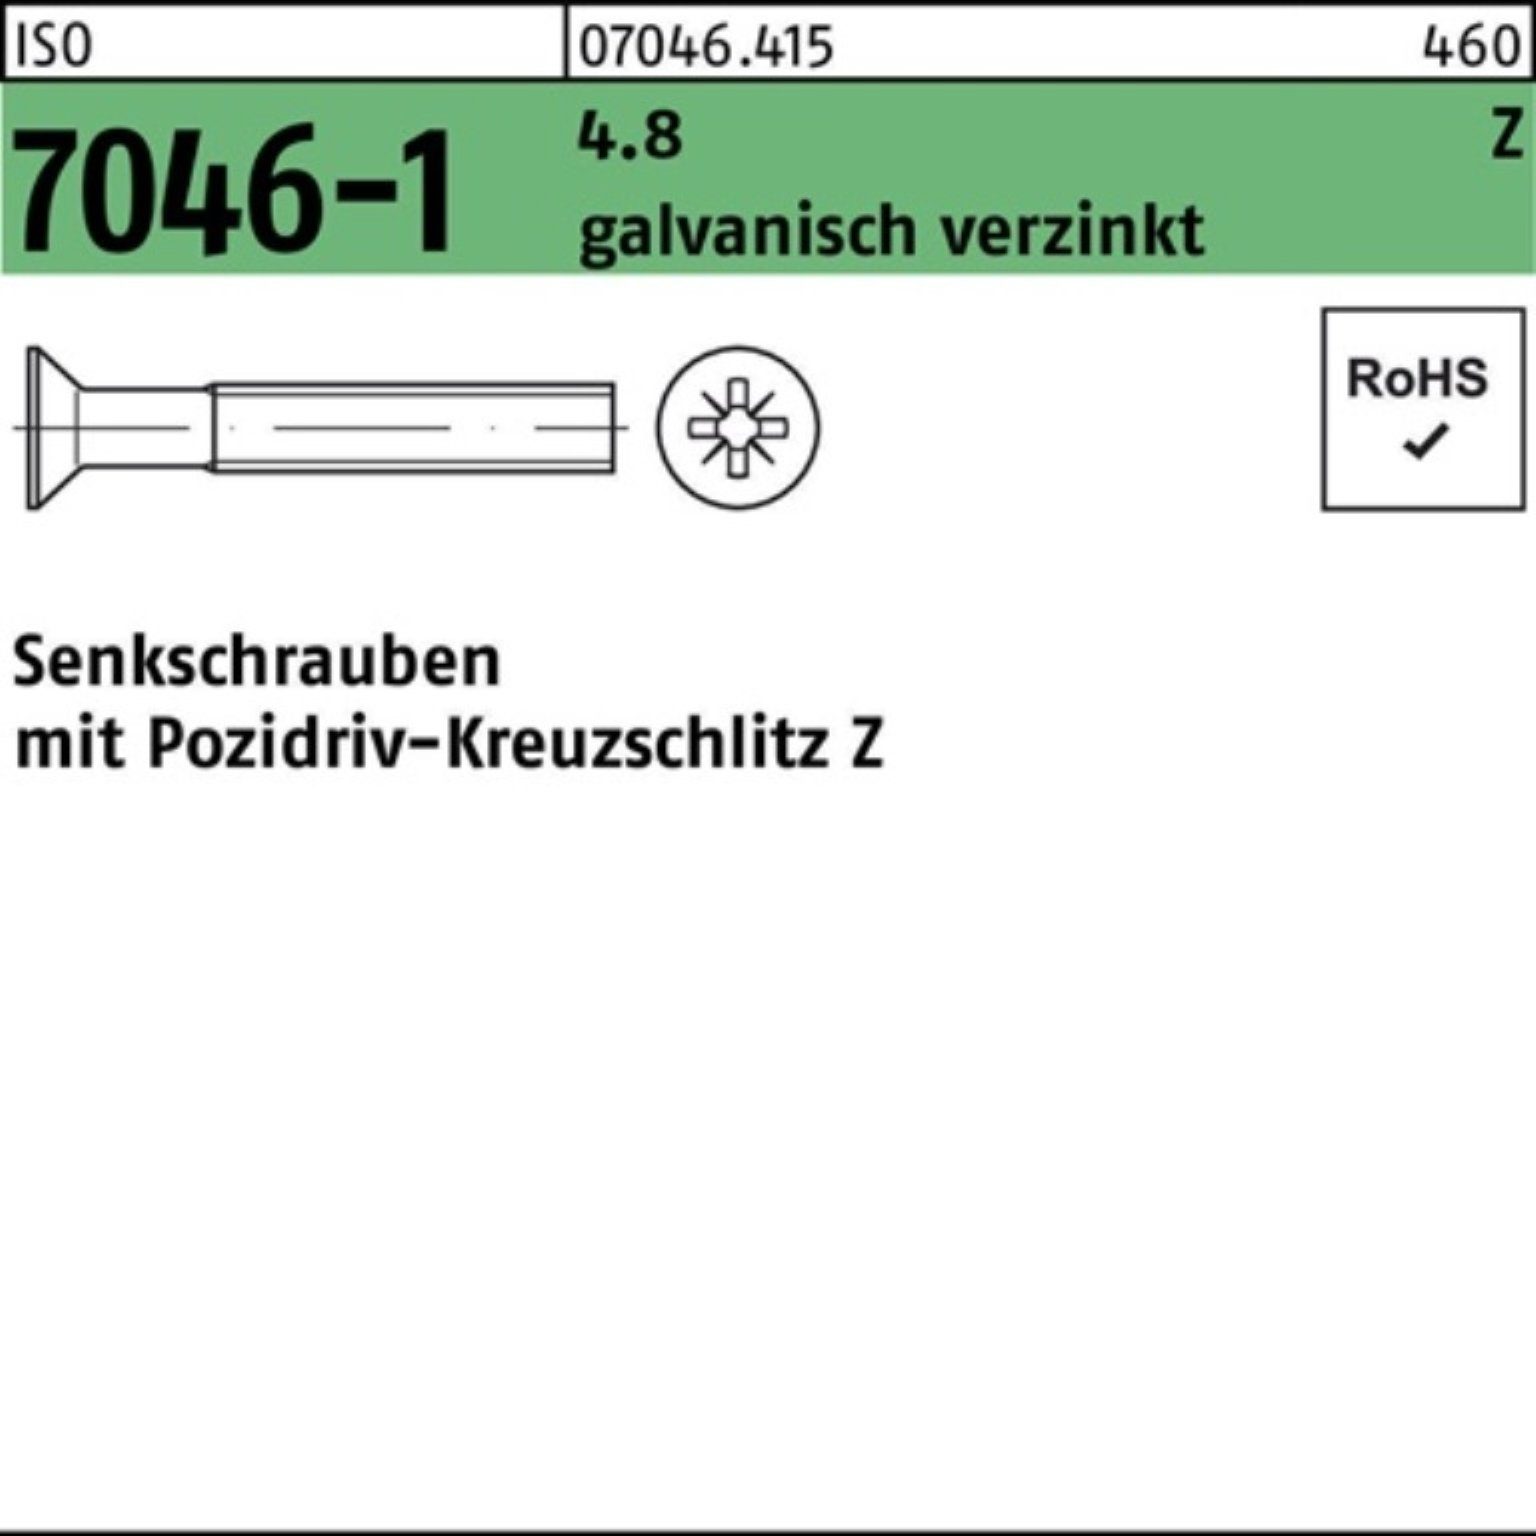 Pack IS Senkschraube 500St. galv.verz. 7046-1 PZ Senkschraube Reyher 4.8 500er M4x45-Z ISO